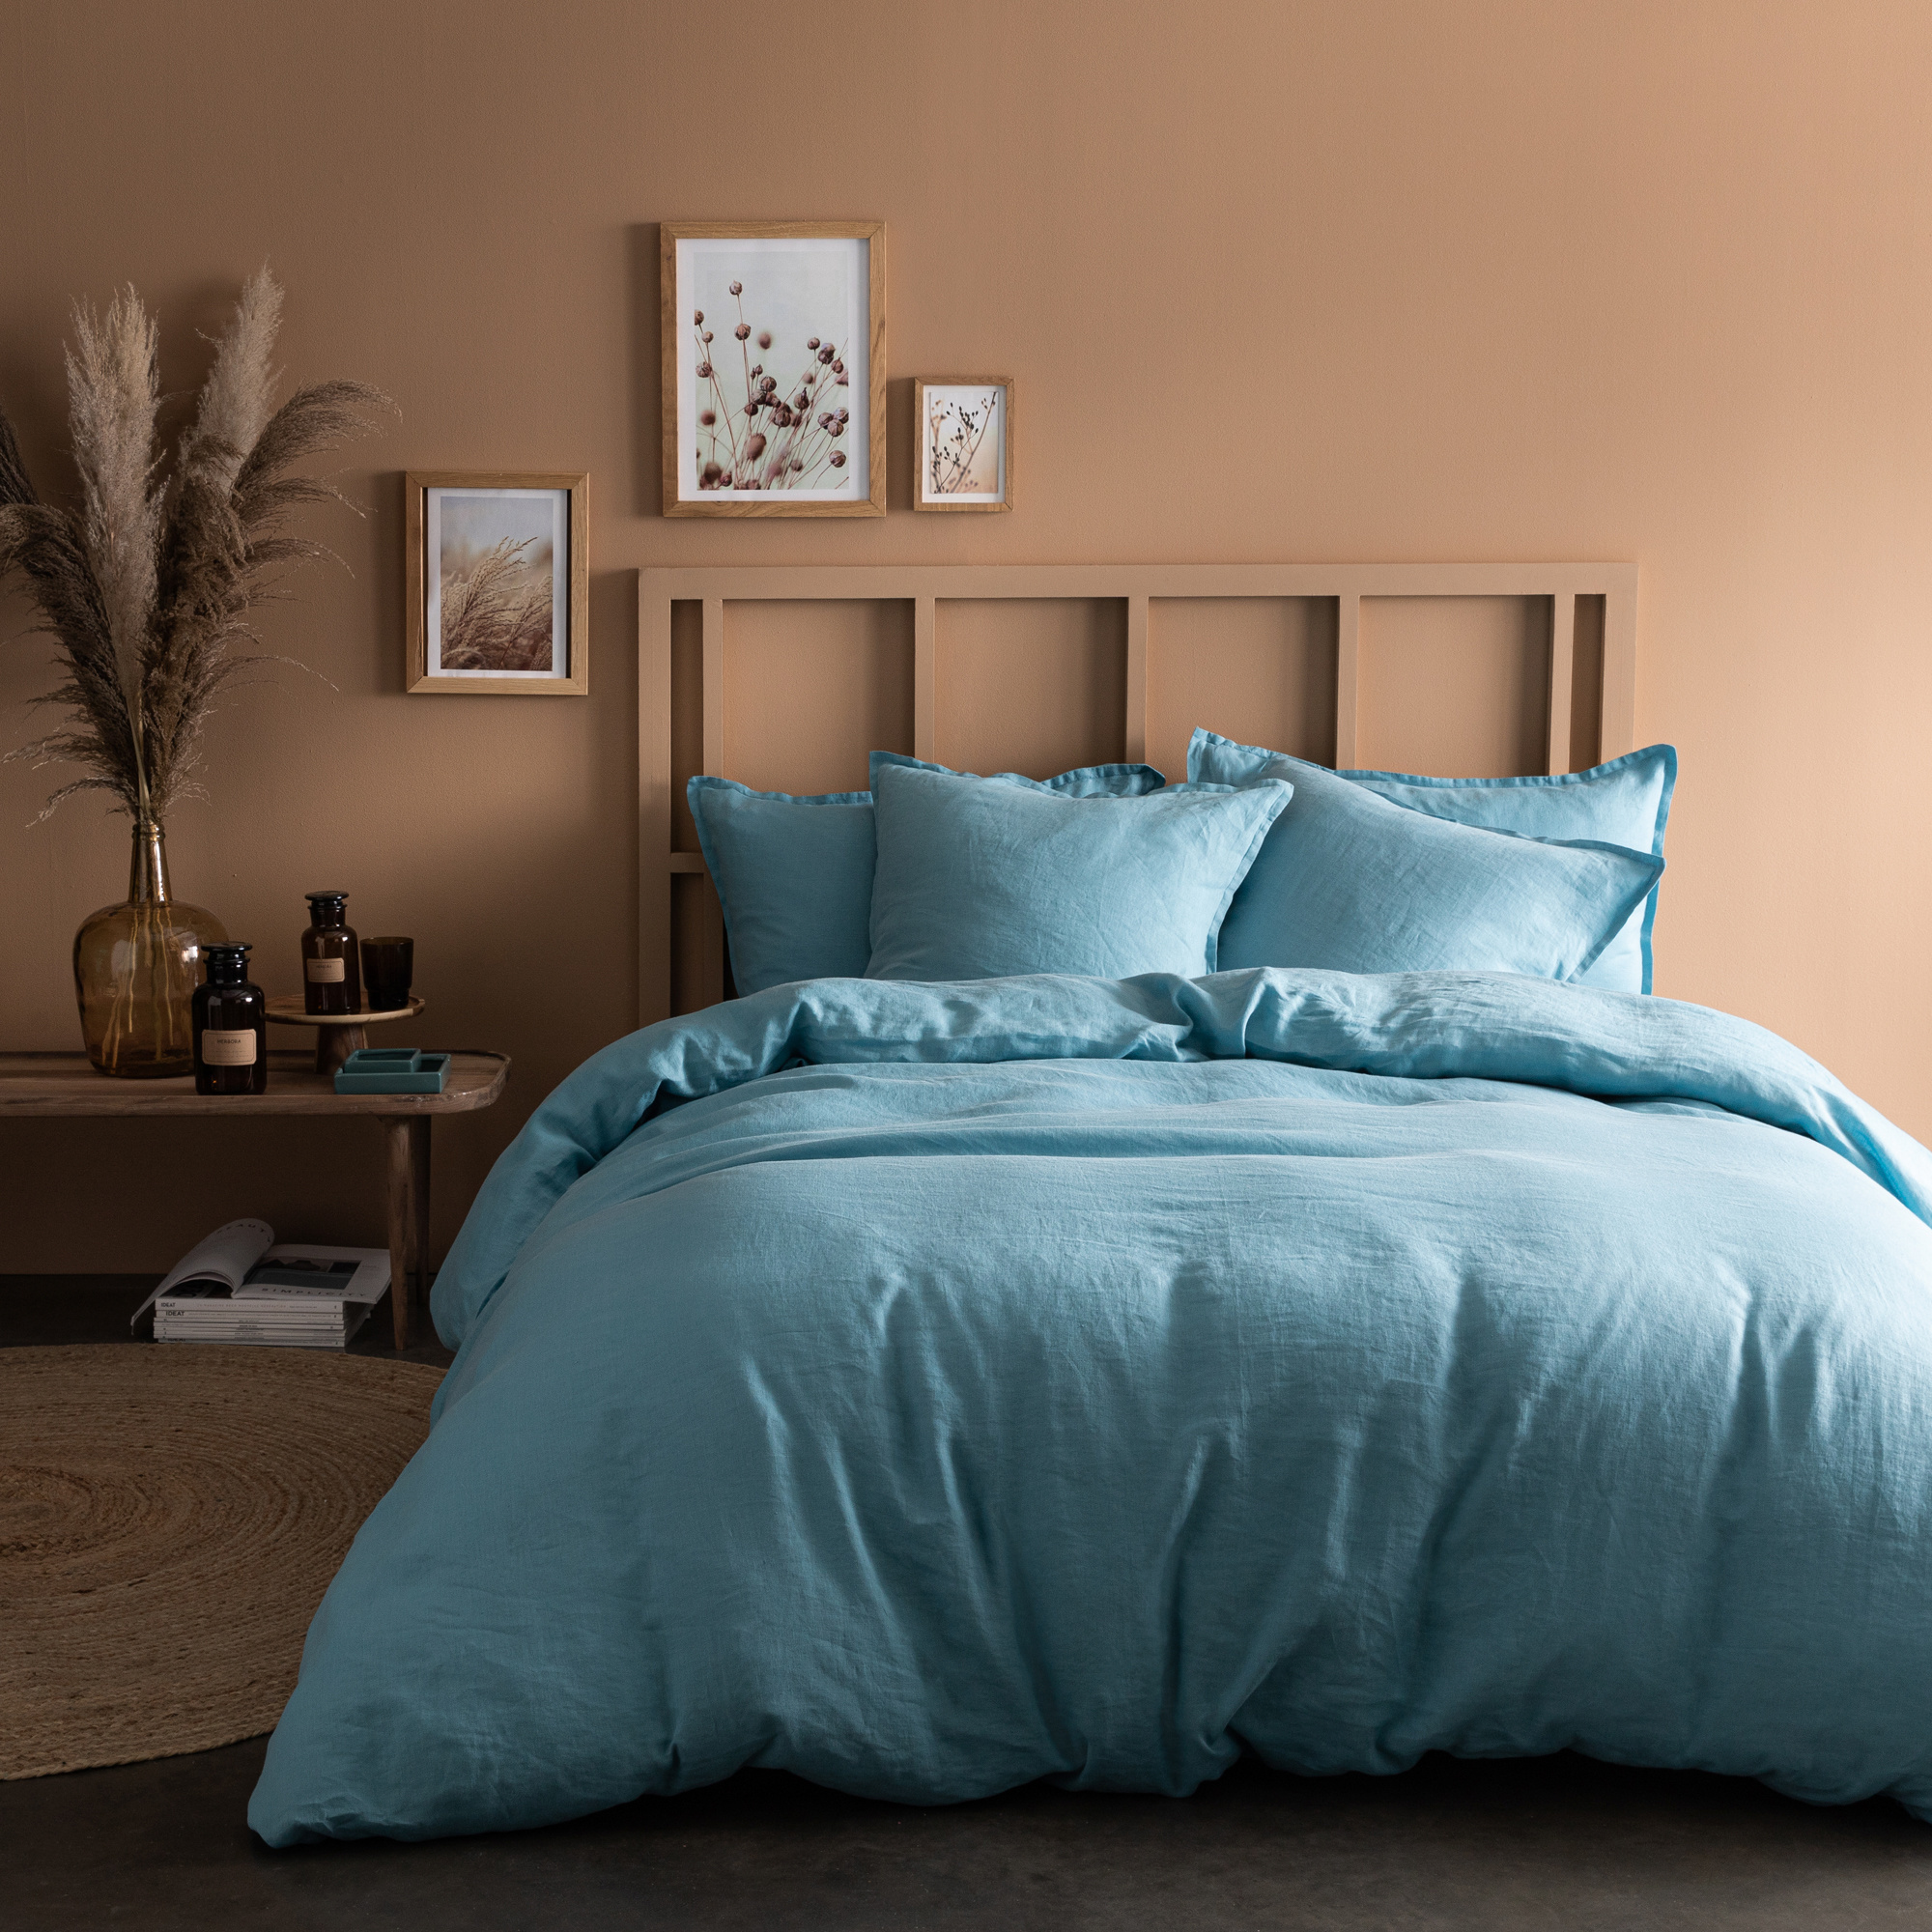 Matt & Rose Duvet cover Ice Blue - Hotel size - 260 x 240 cm, without pillowcases - 100% Linen